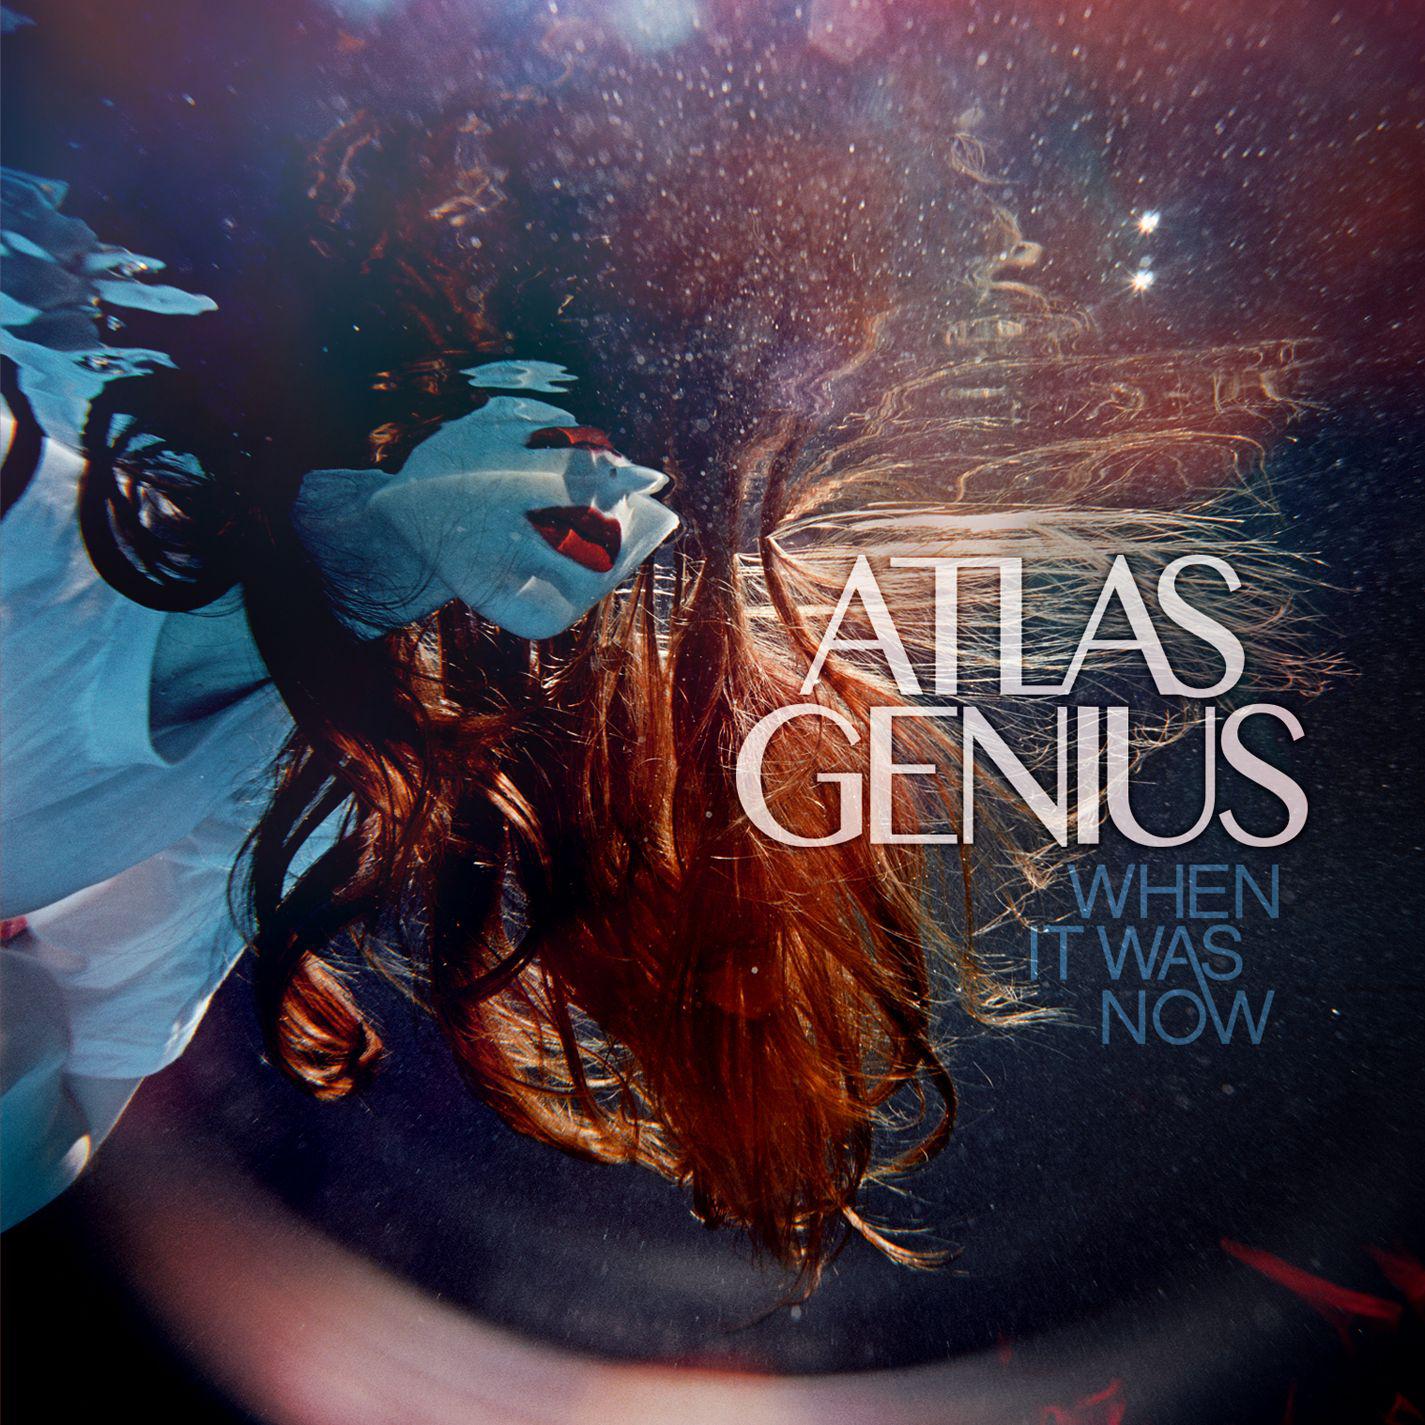 Atlas Genius - Centred On You